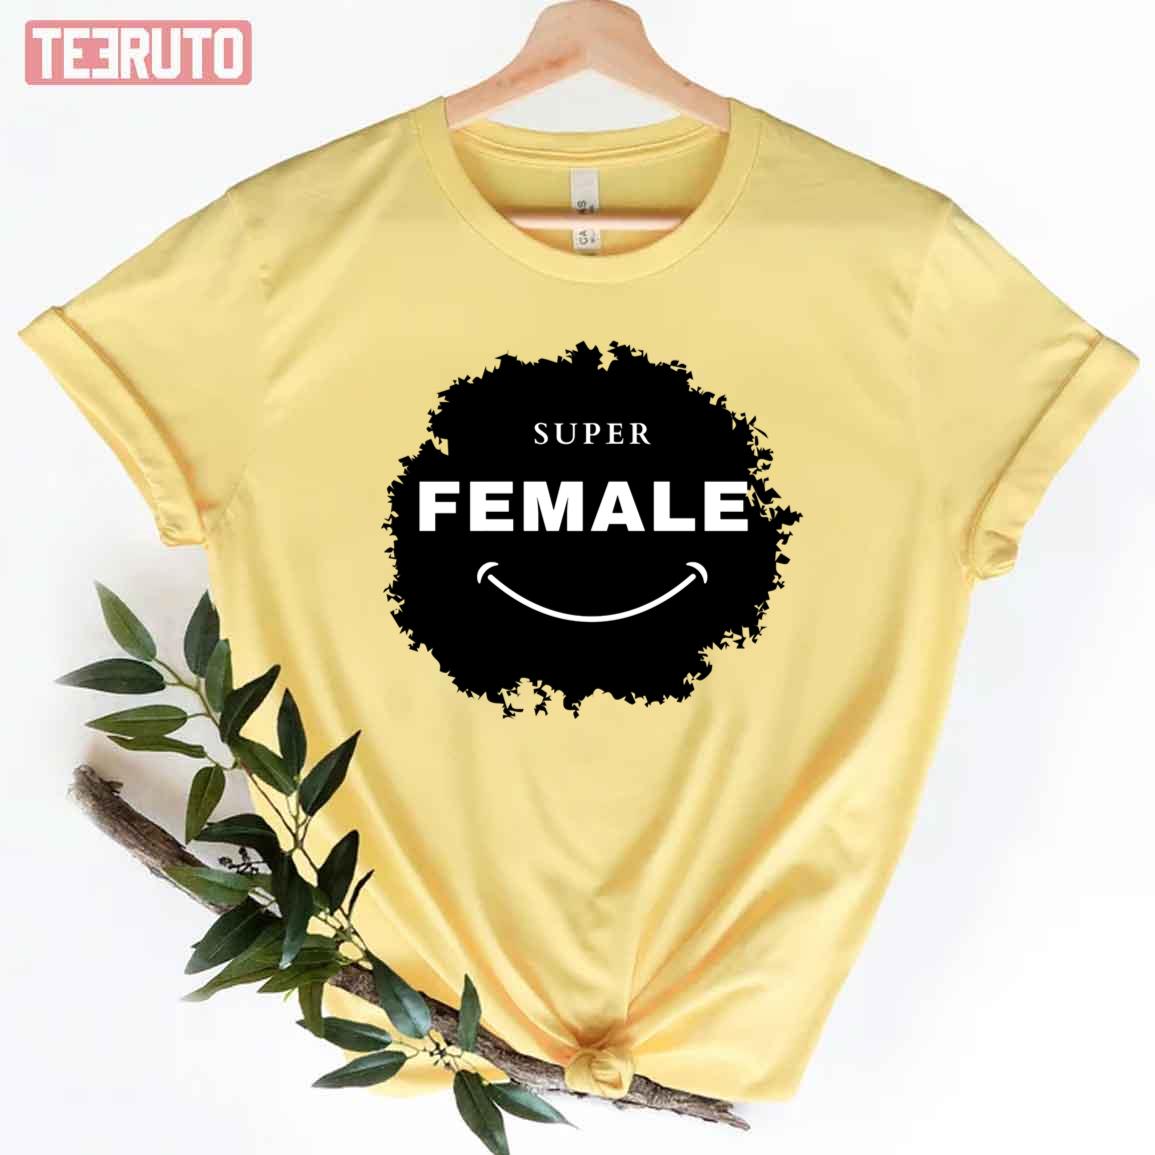 Super Female Megyn Kelly Unisex T-Shirt